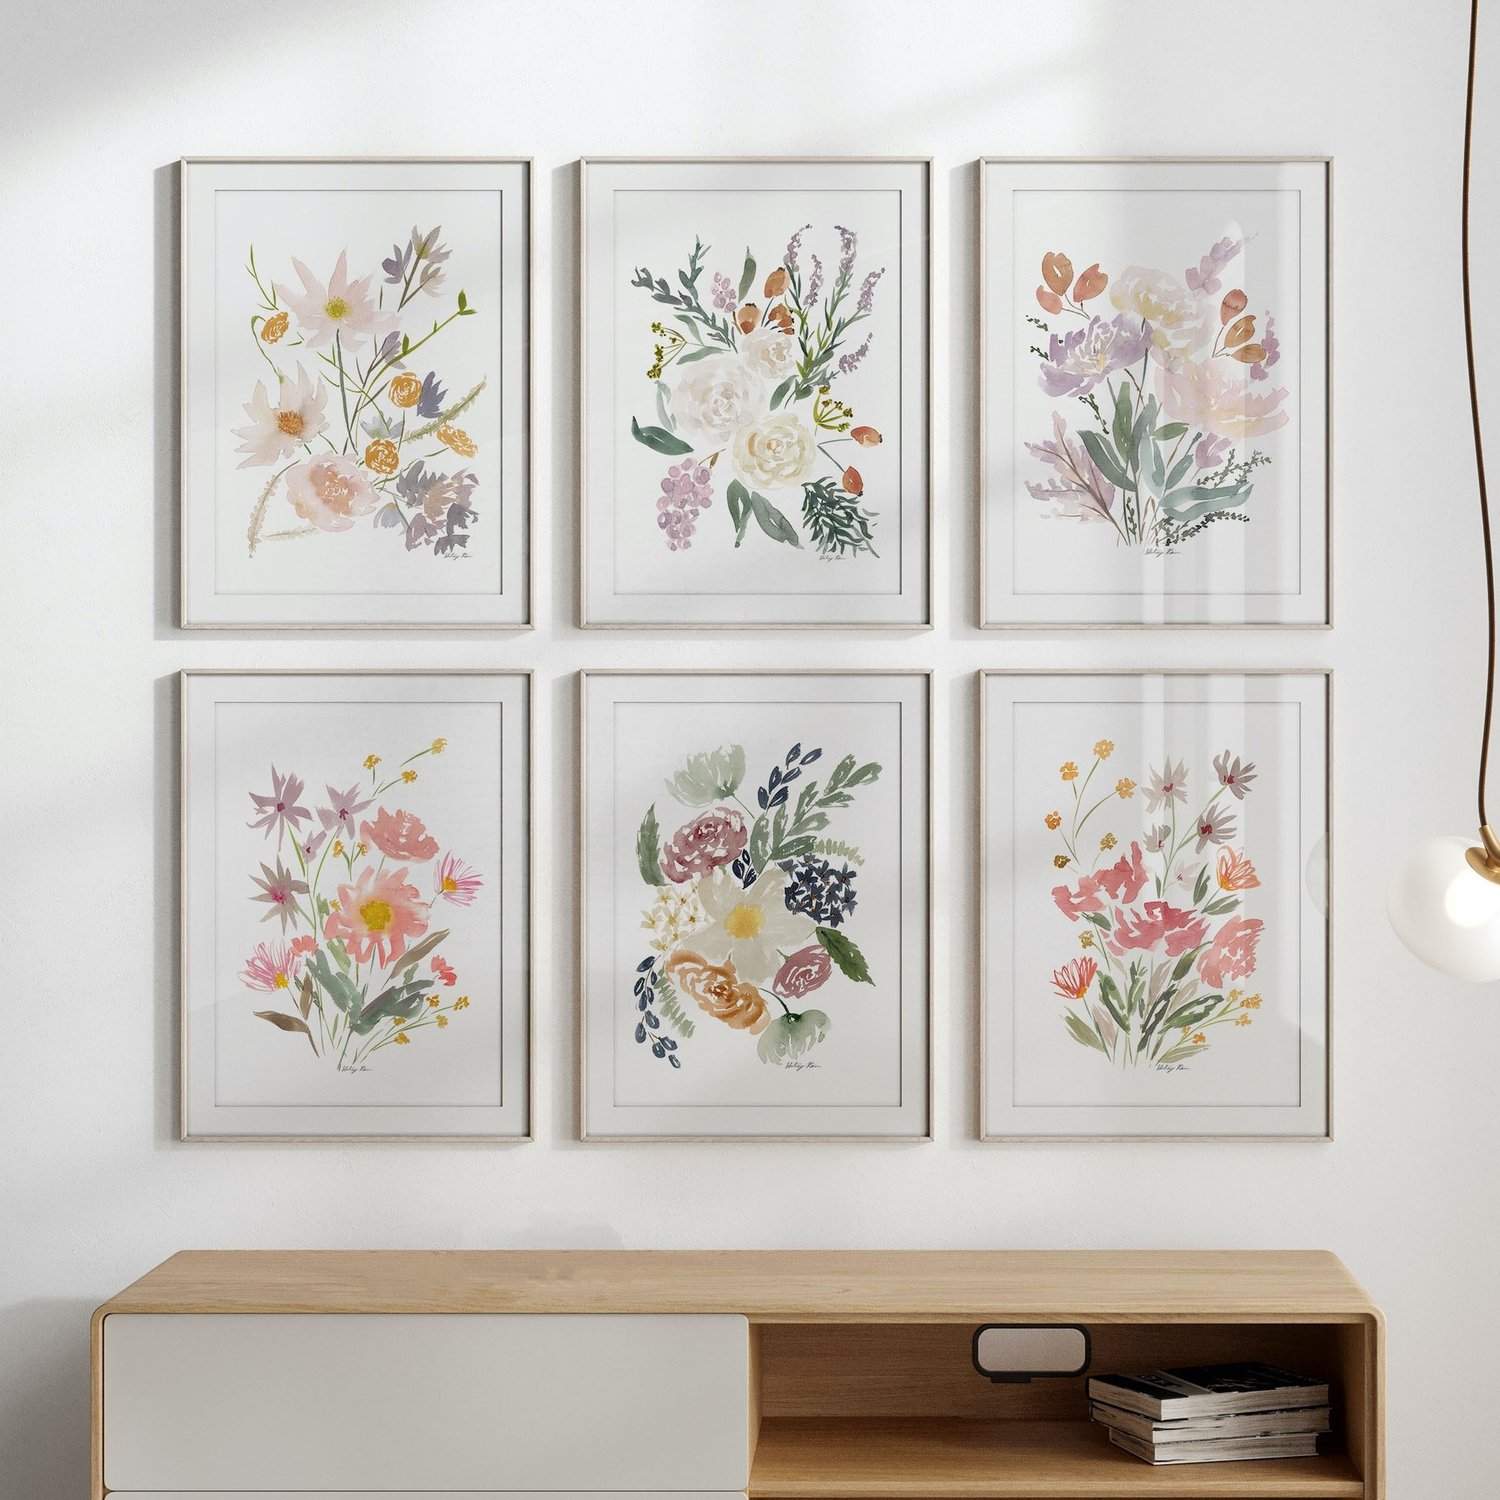 Winter Floral Watercolor Print — WHITNEY RAIN STUDIO